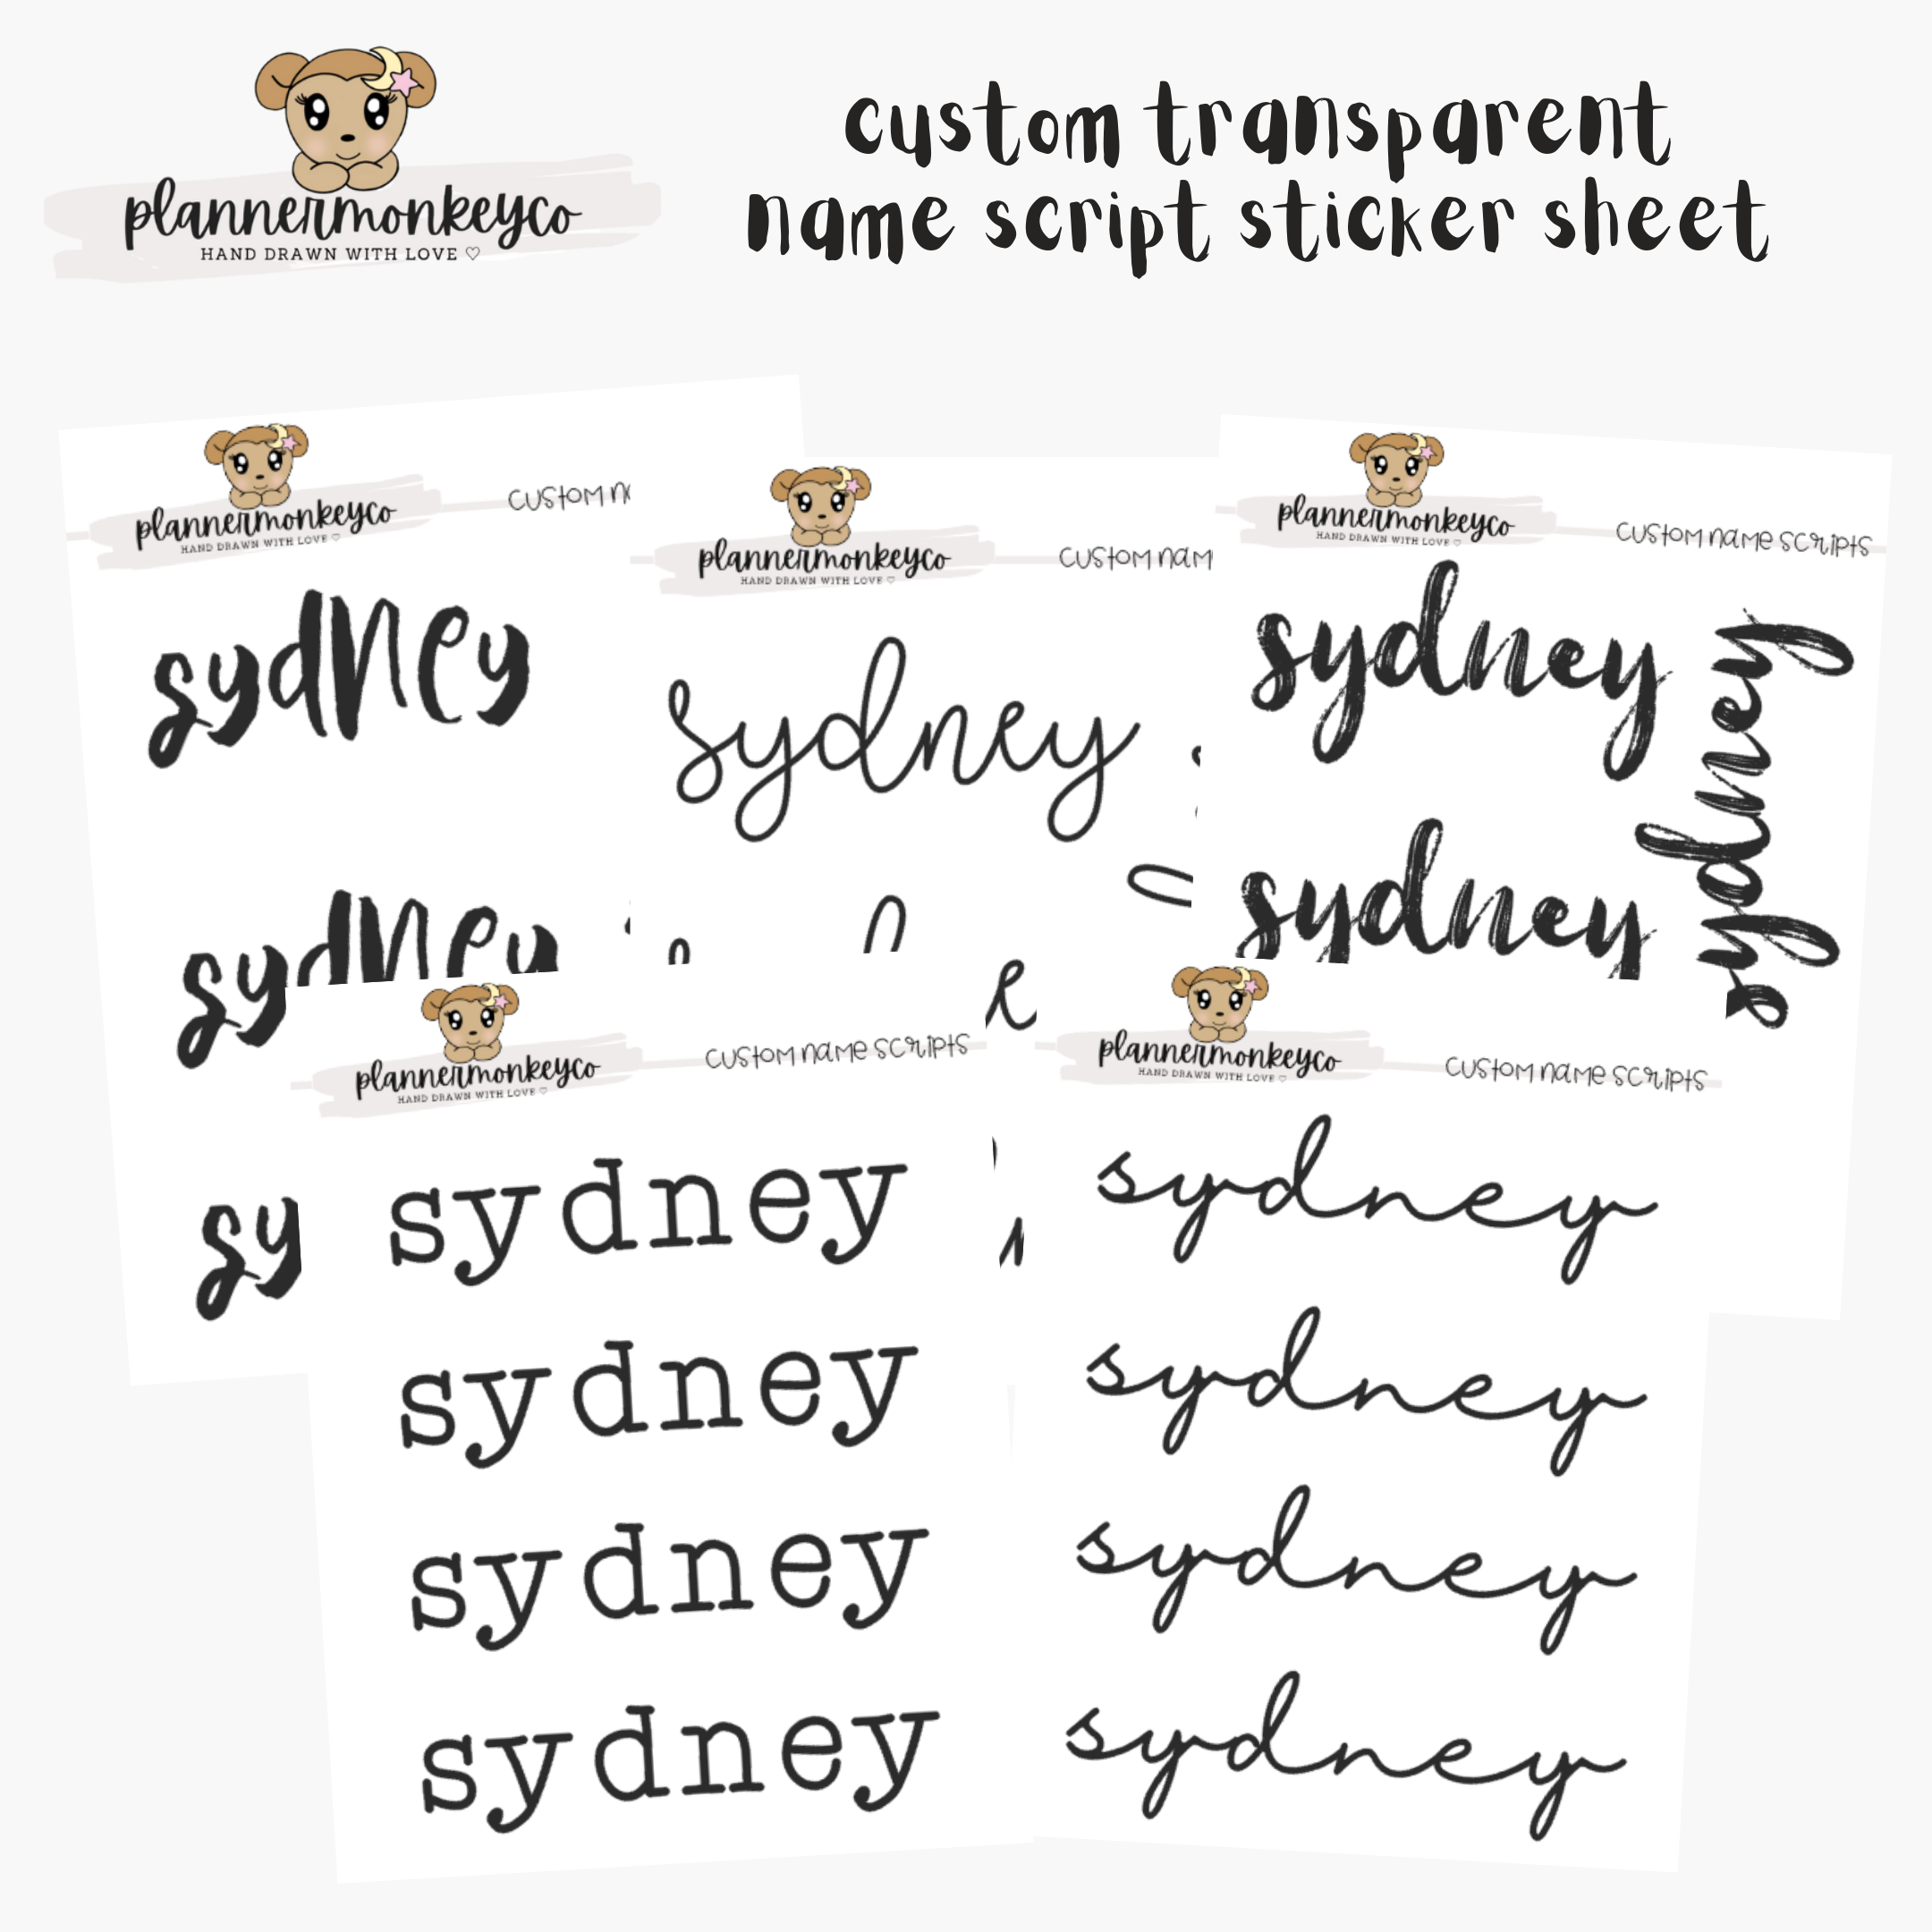 Sydney - plannermonkeyco (@plannermonkeyco) • Instagram photos and